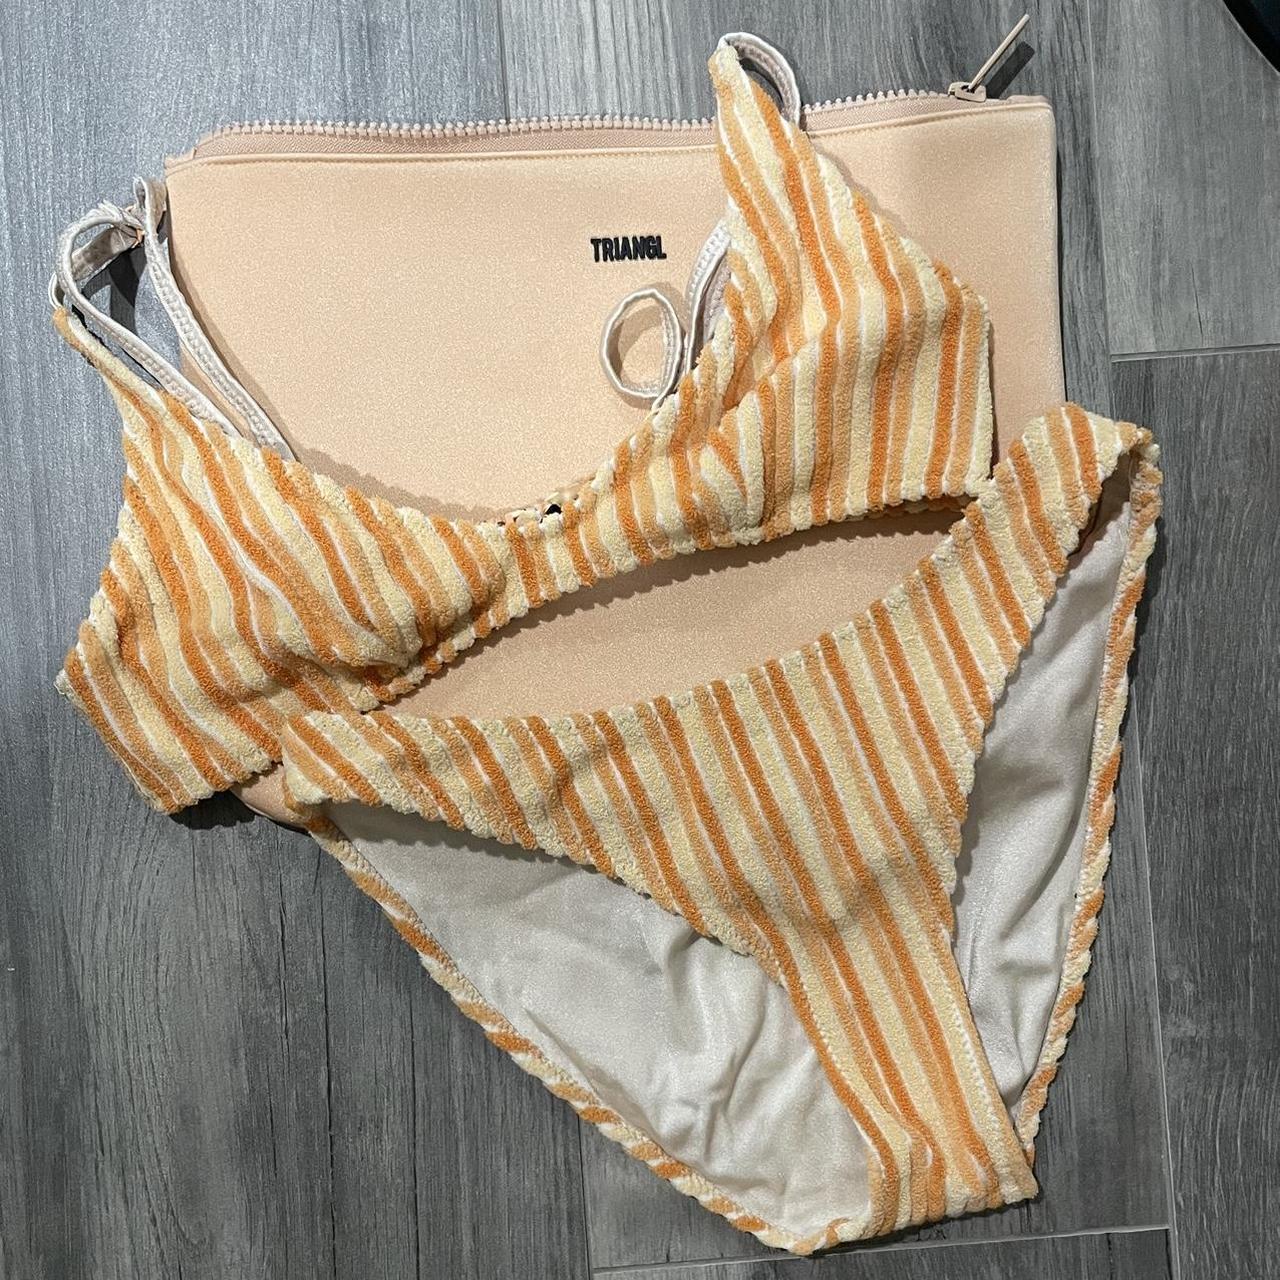 Triangl orange stripe Maya shape bikini set Size XS - Depop